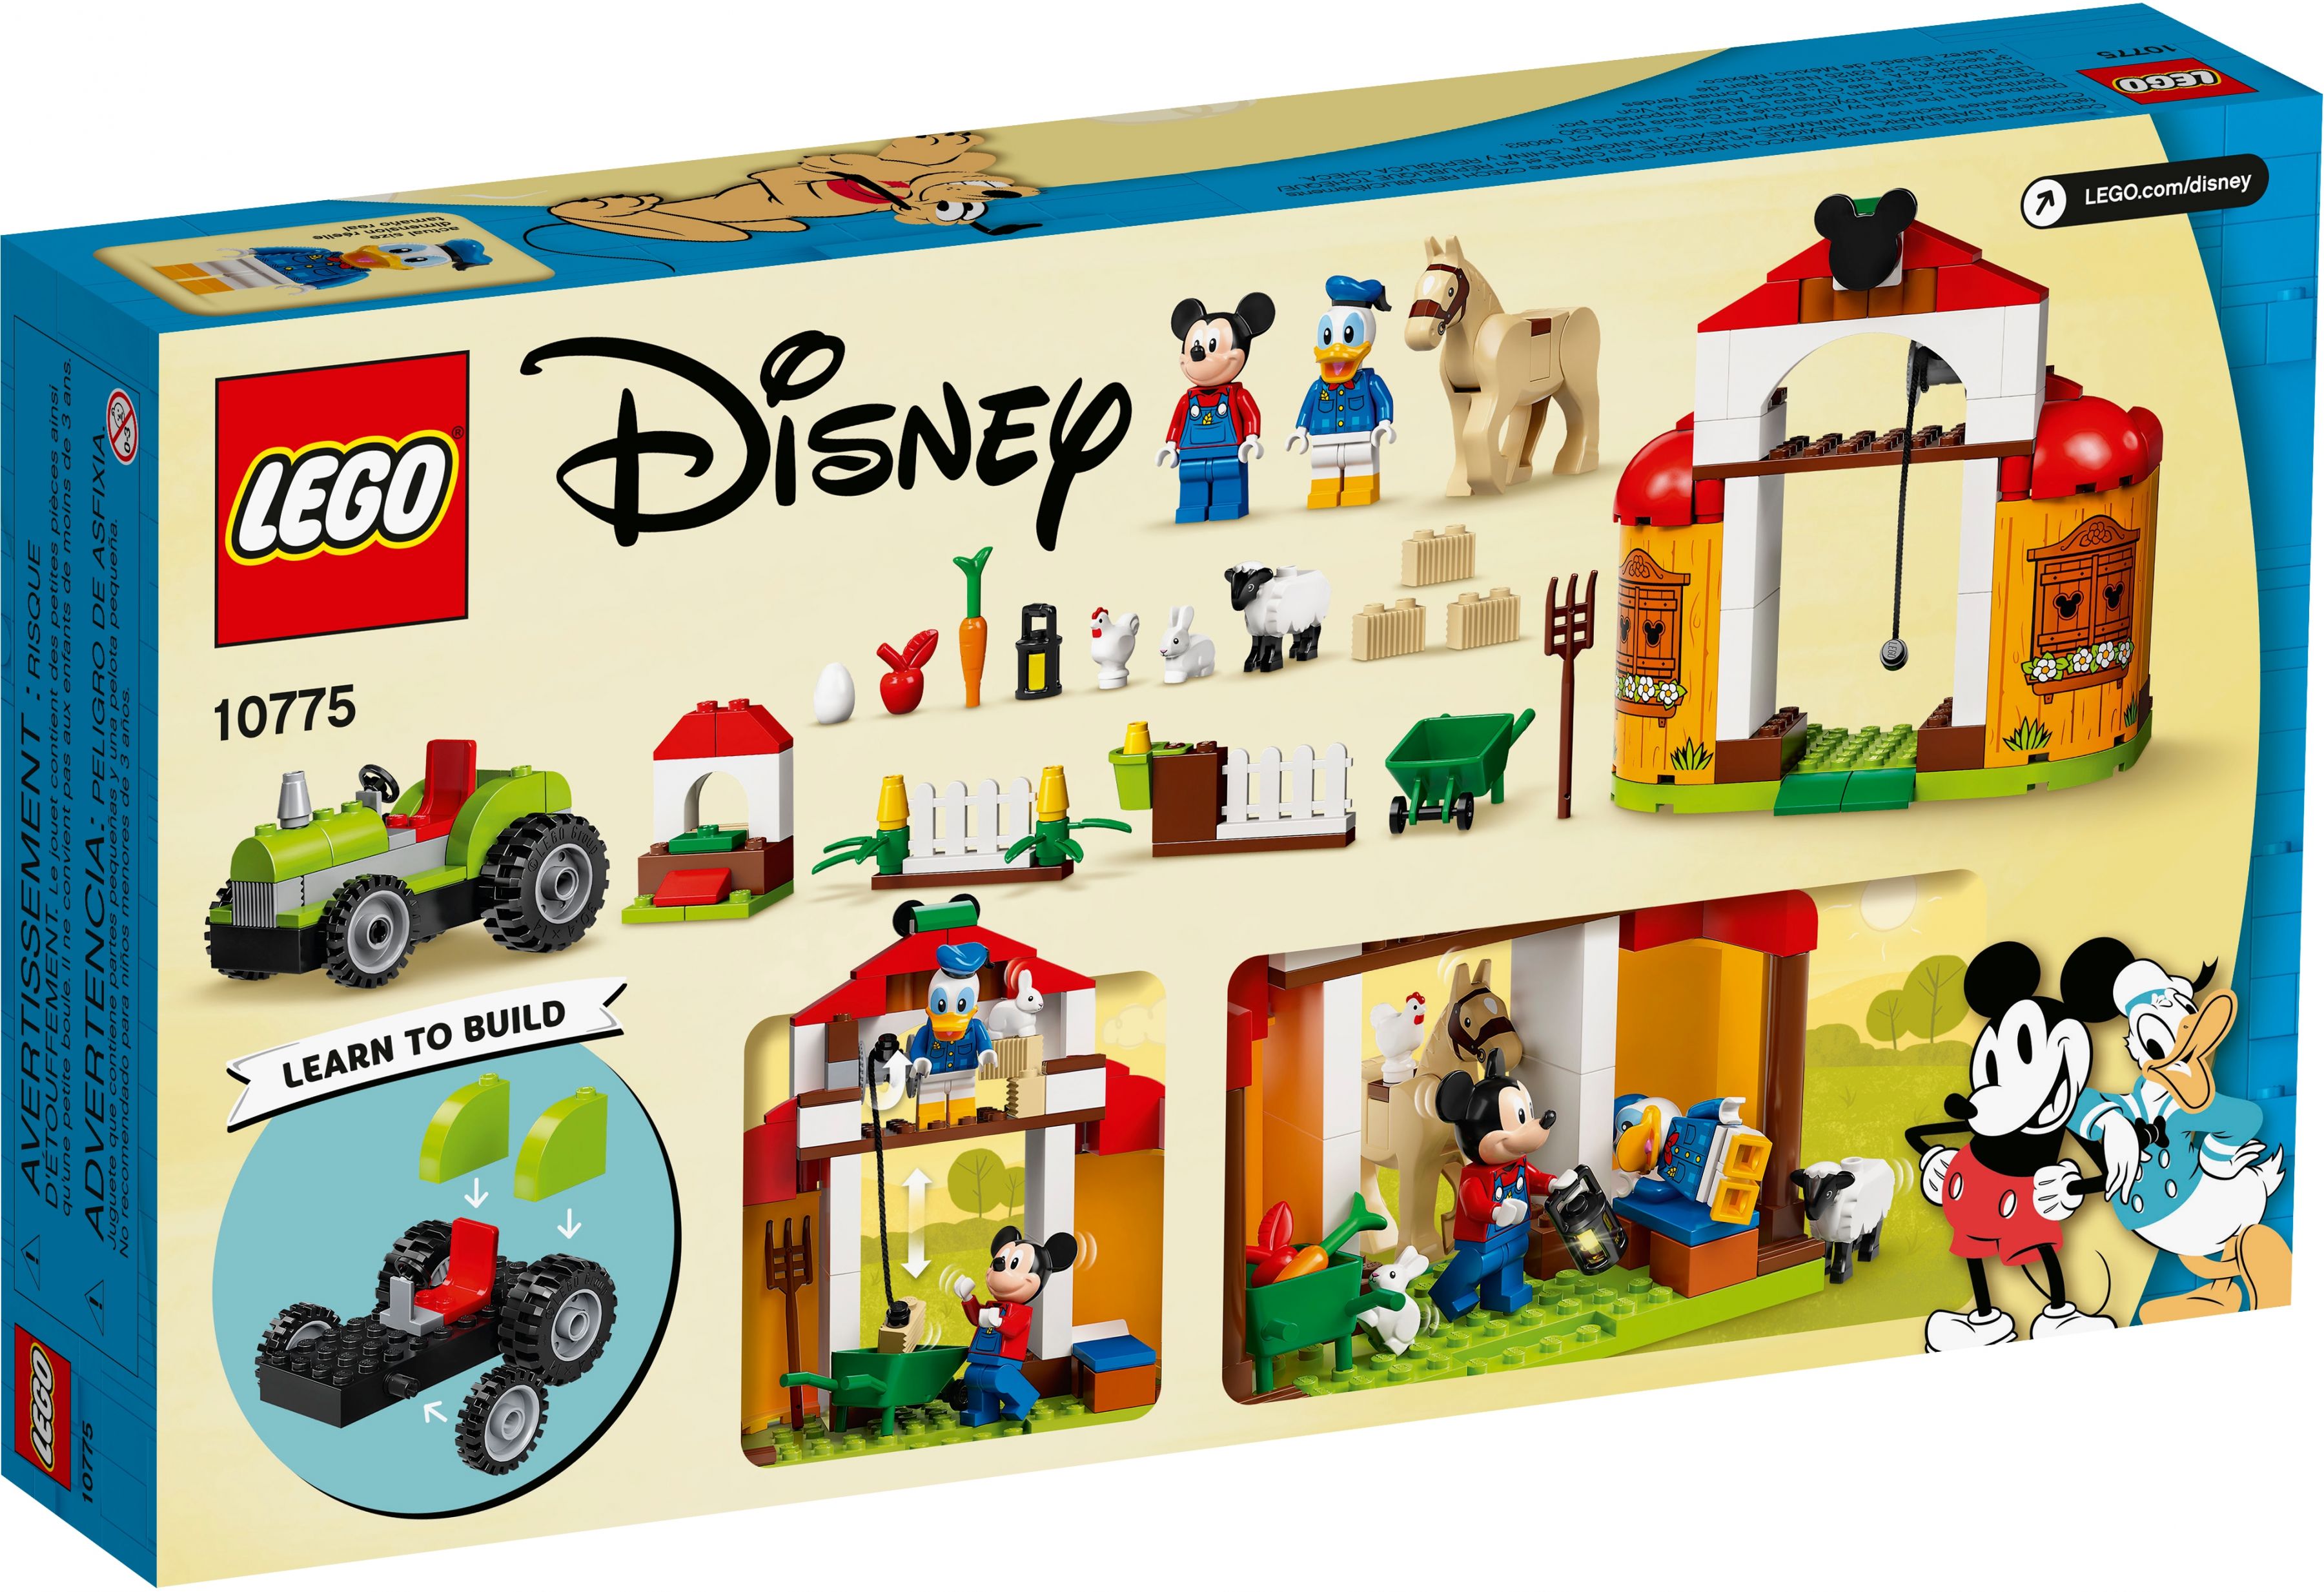 LEGO Disney 10775 Mickys und Donald Duck's Farm LEGO_10775_box5_v39.jpg